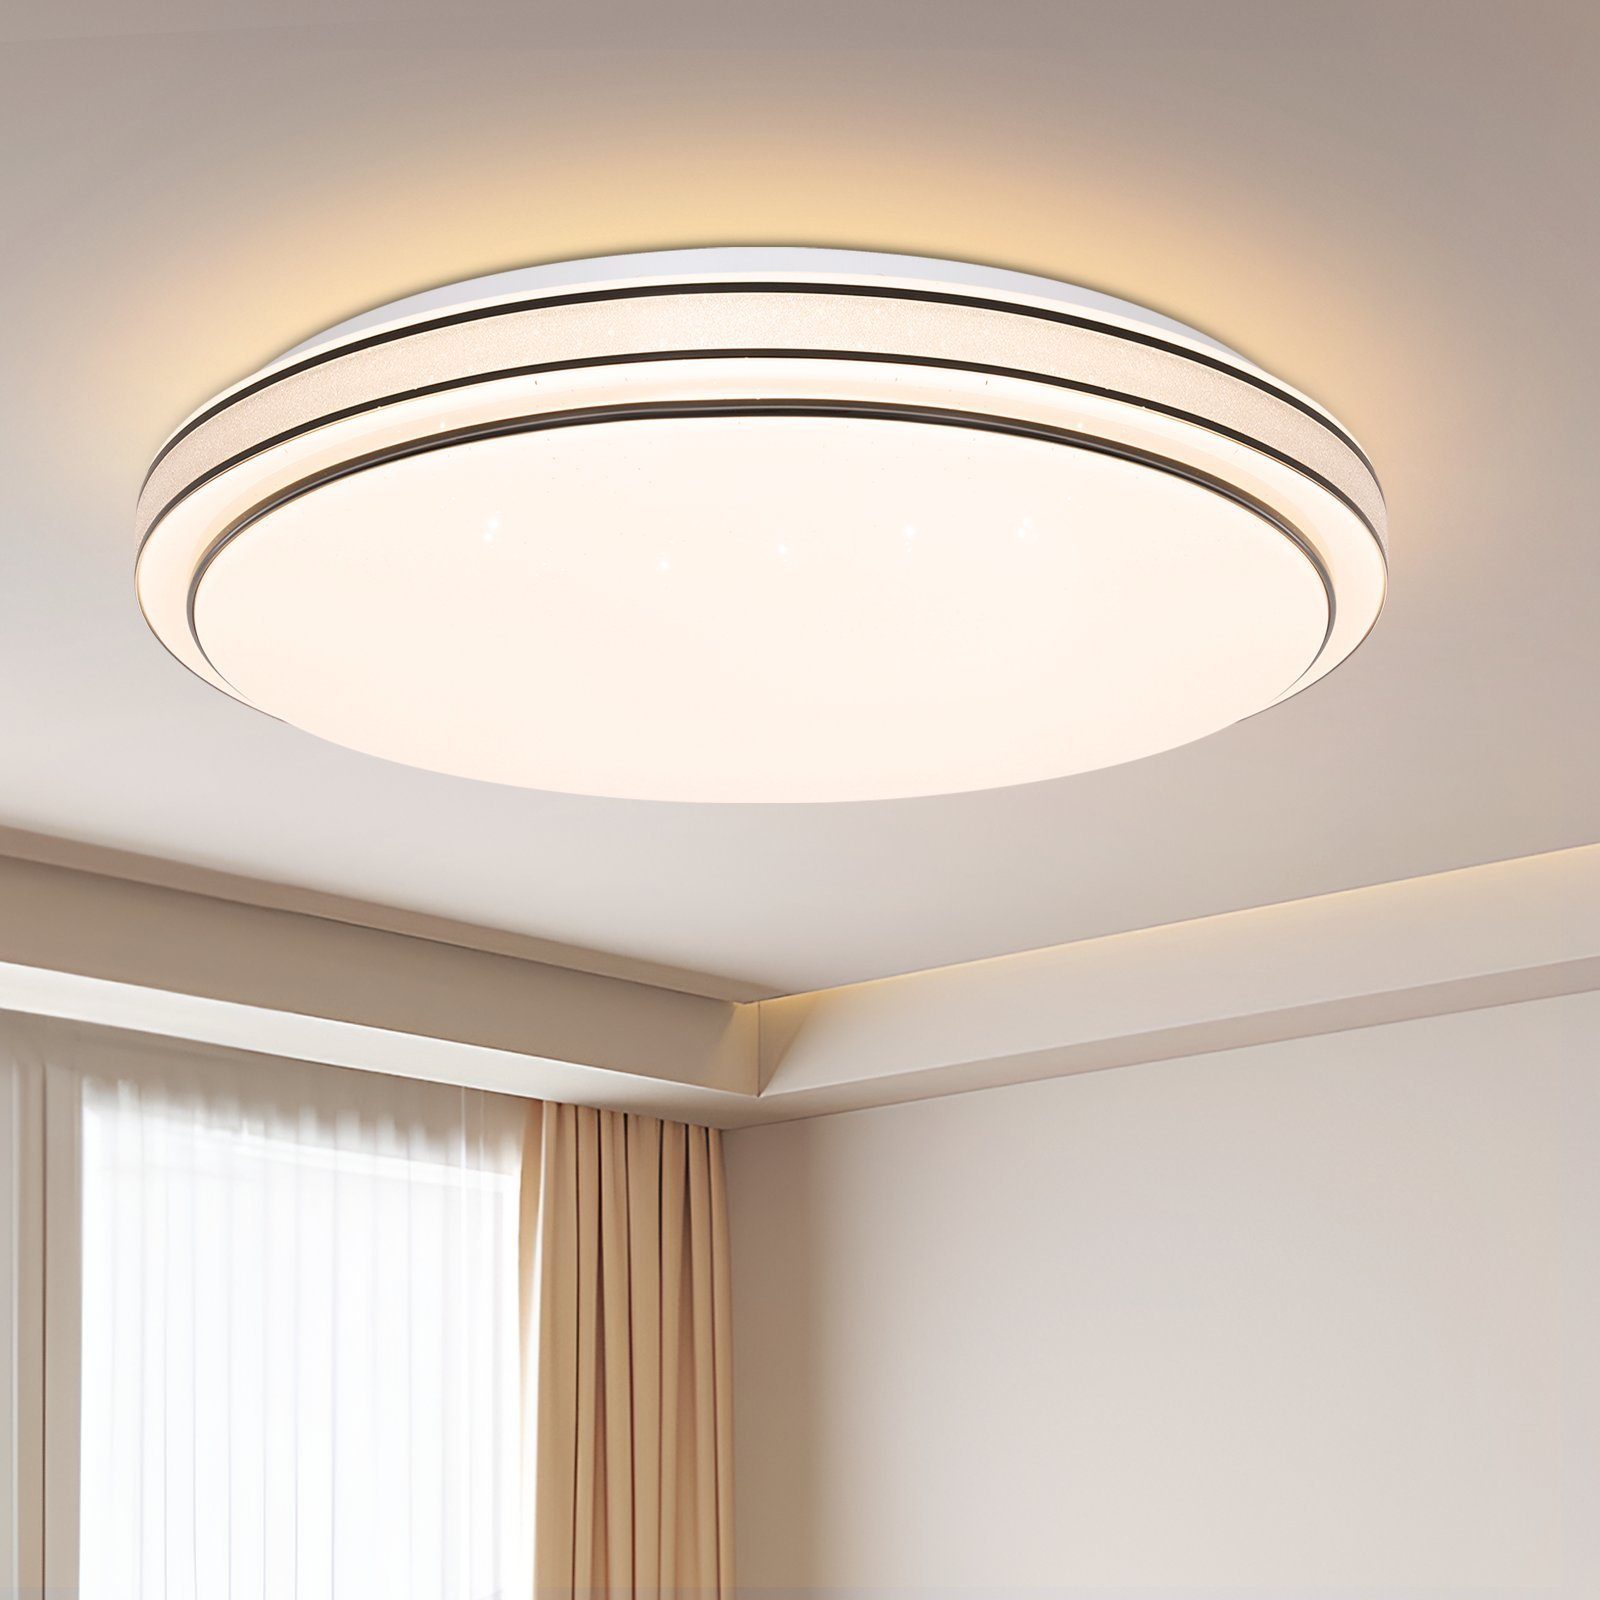 Nettlife LED Deckenleuchte Schlafzimmerlampe Sternenhimmel Flurlampe Rund, LED fest integriert, 12 W